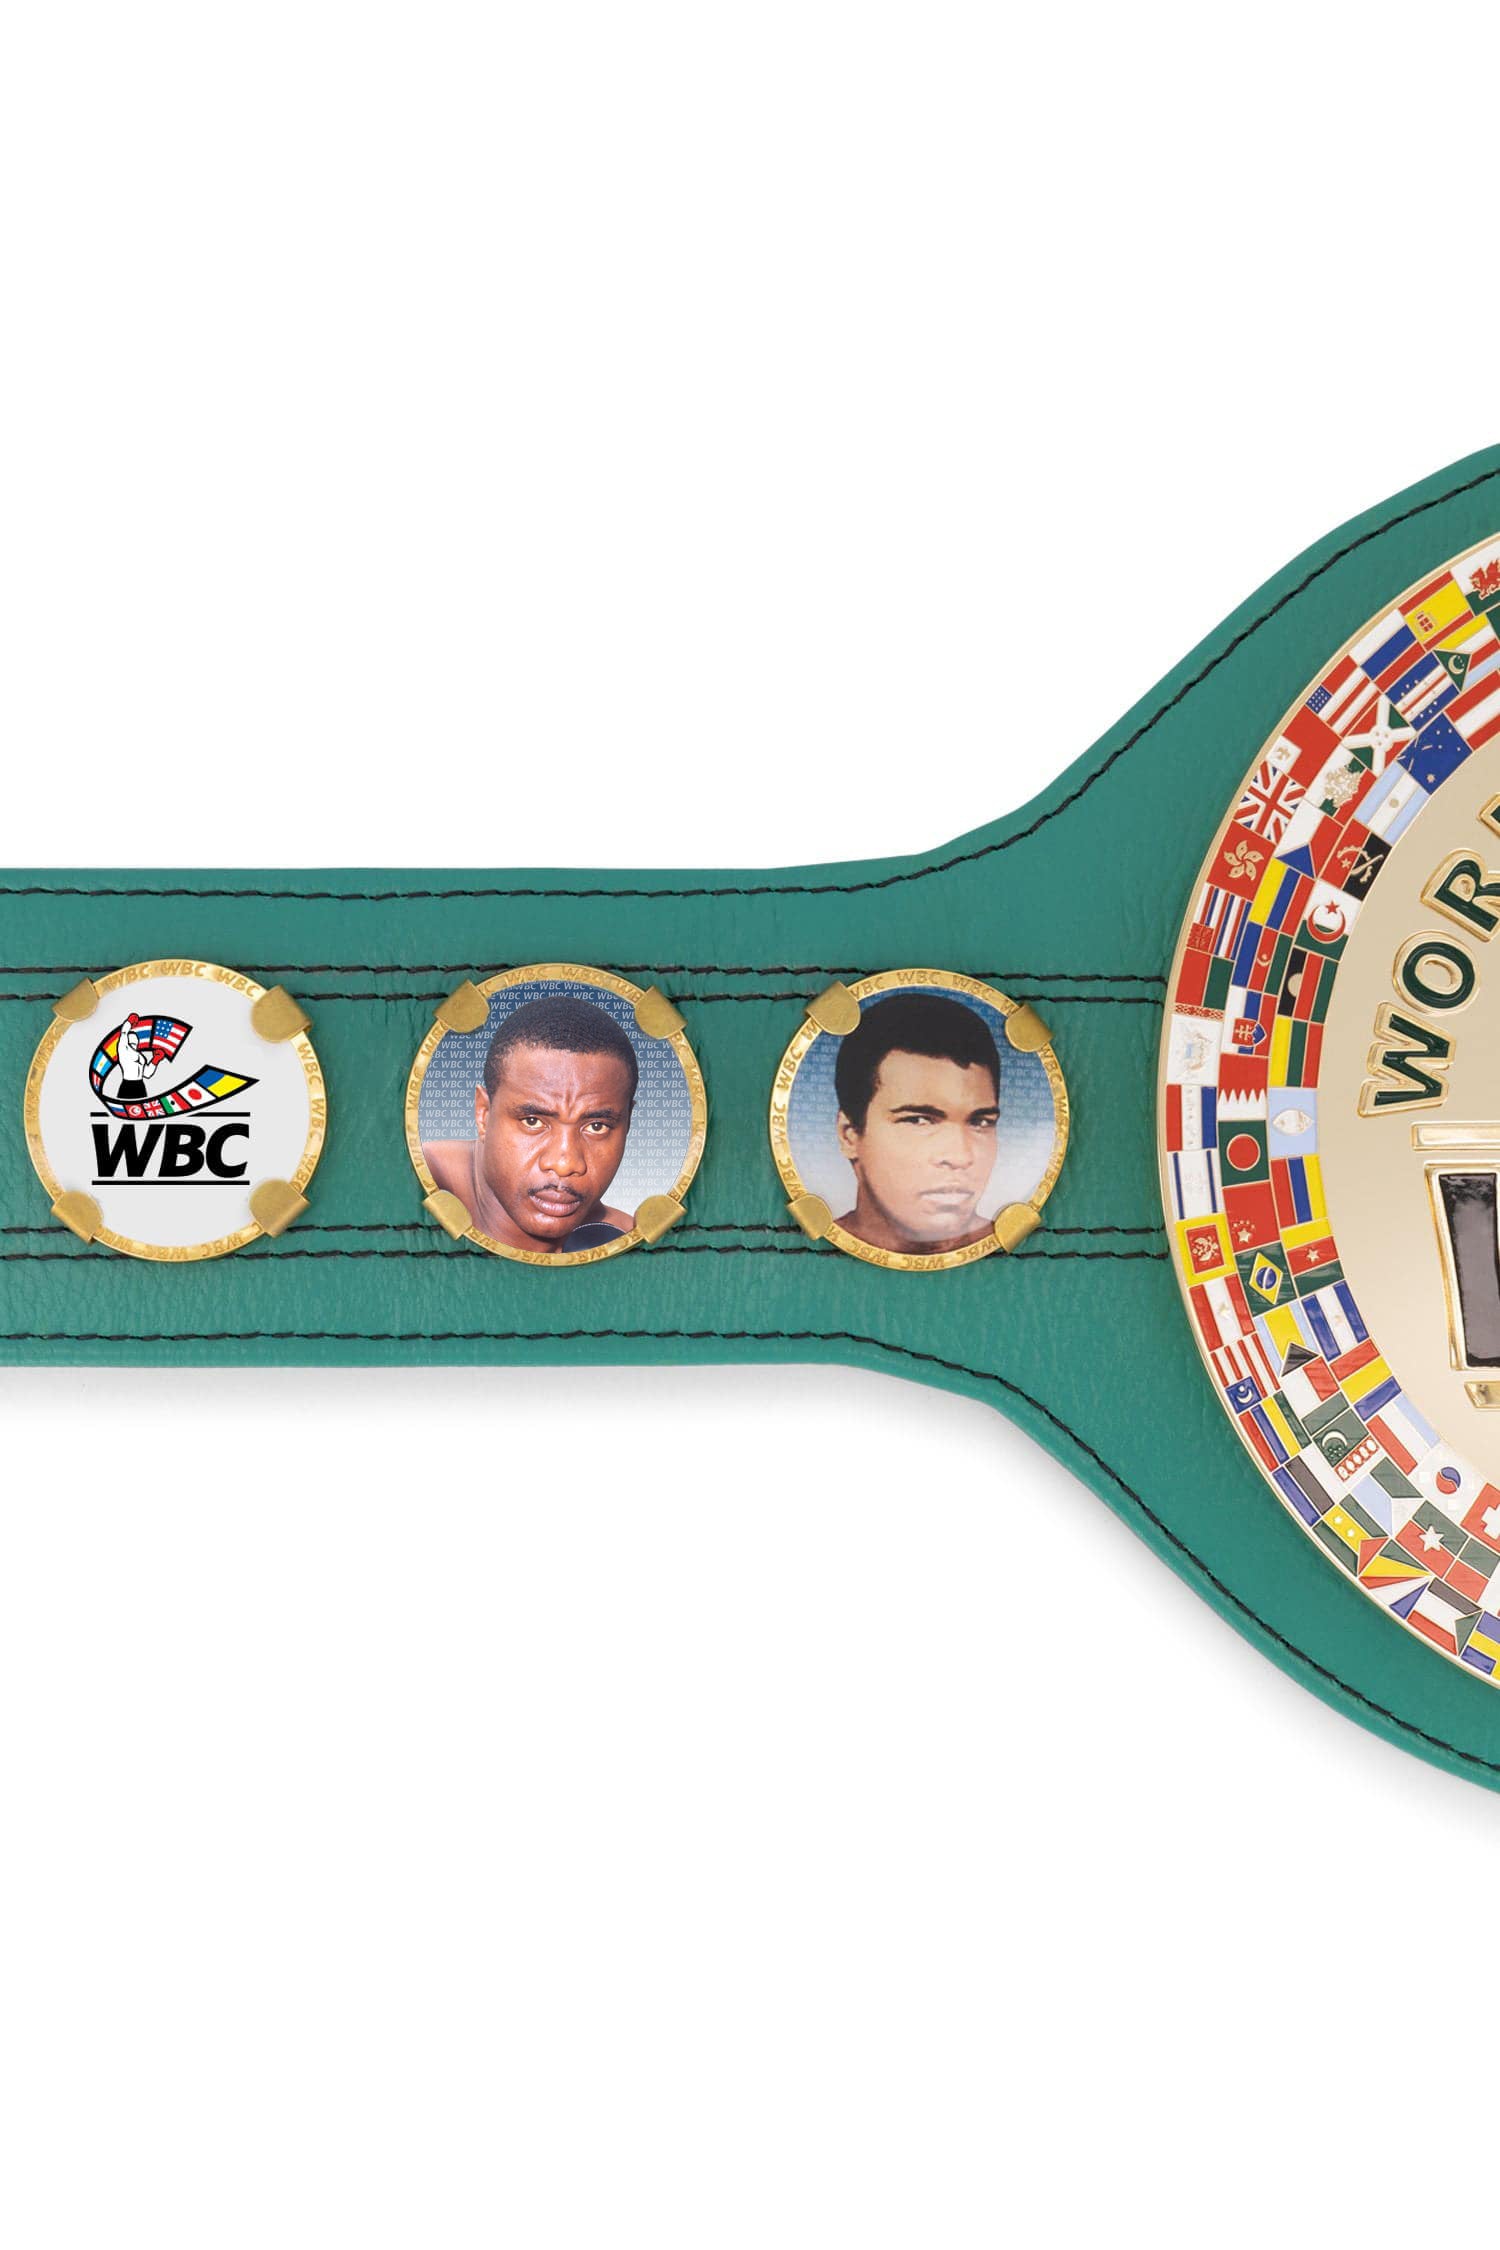 WBC Store WBC - Championship Belt "In Honor to Muhammad Ali Collection" Muhammad Ali vs Sonny Liston